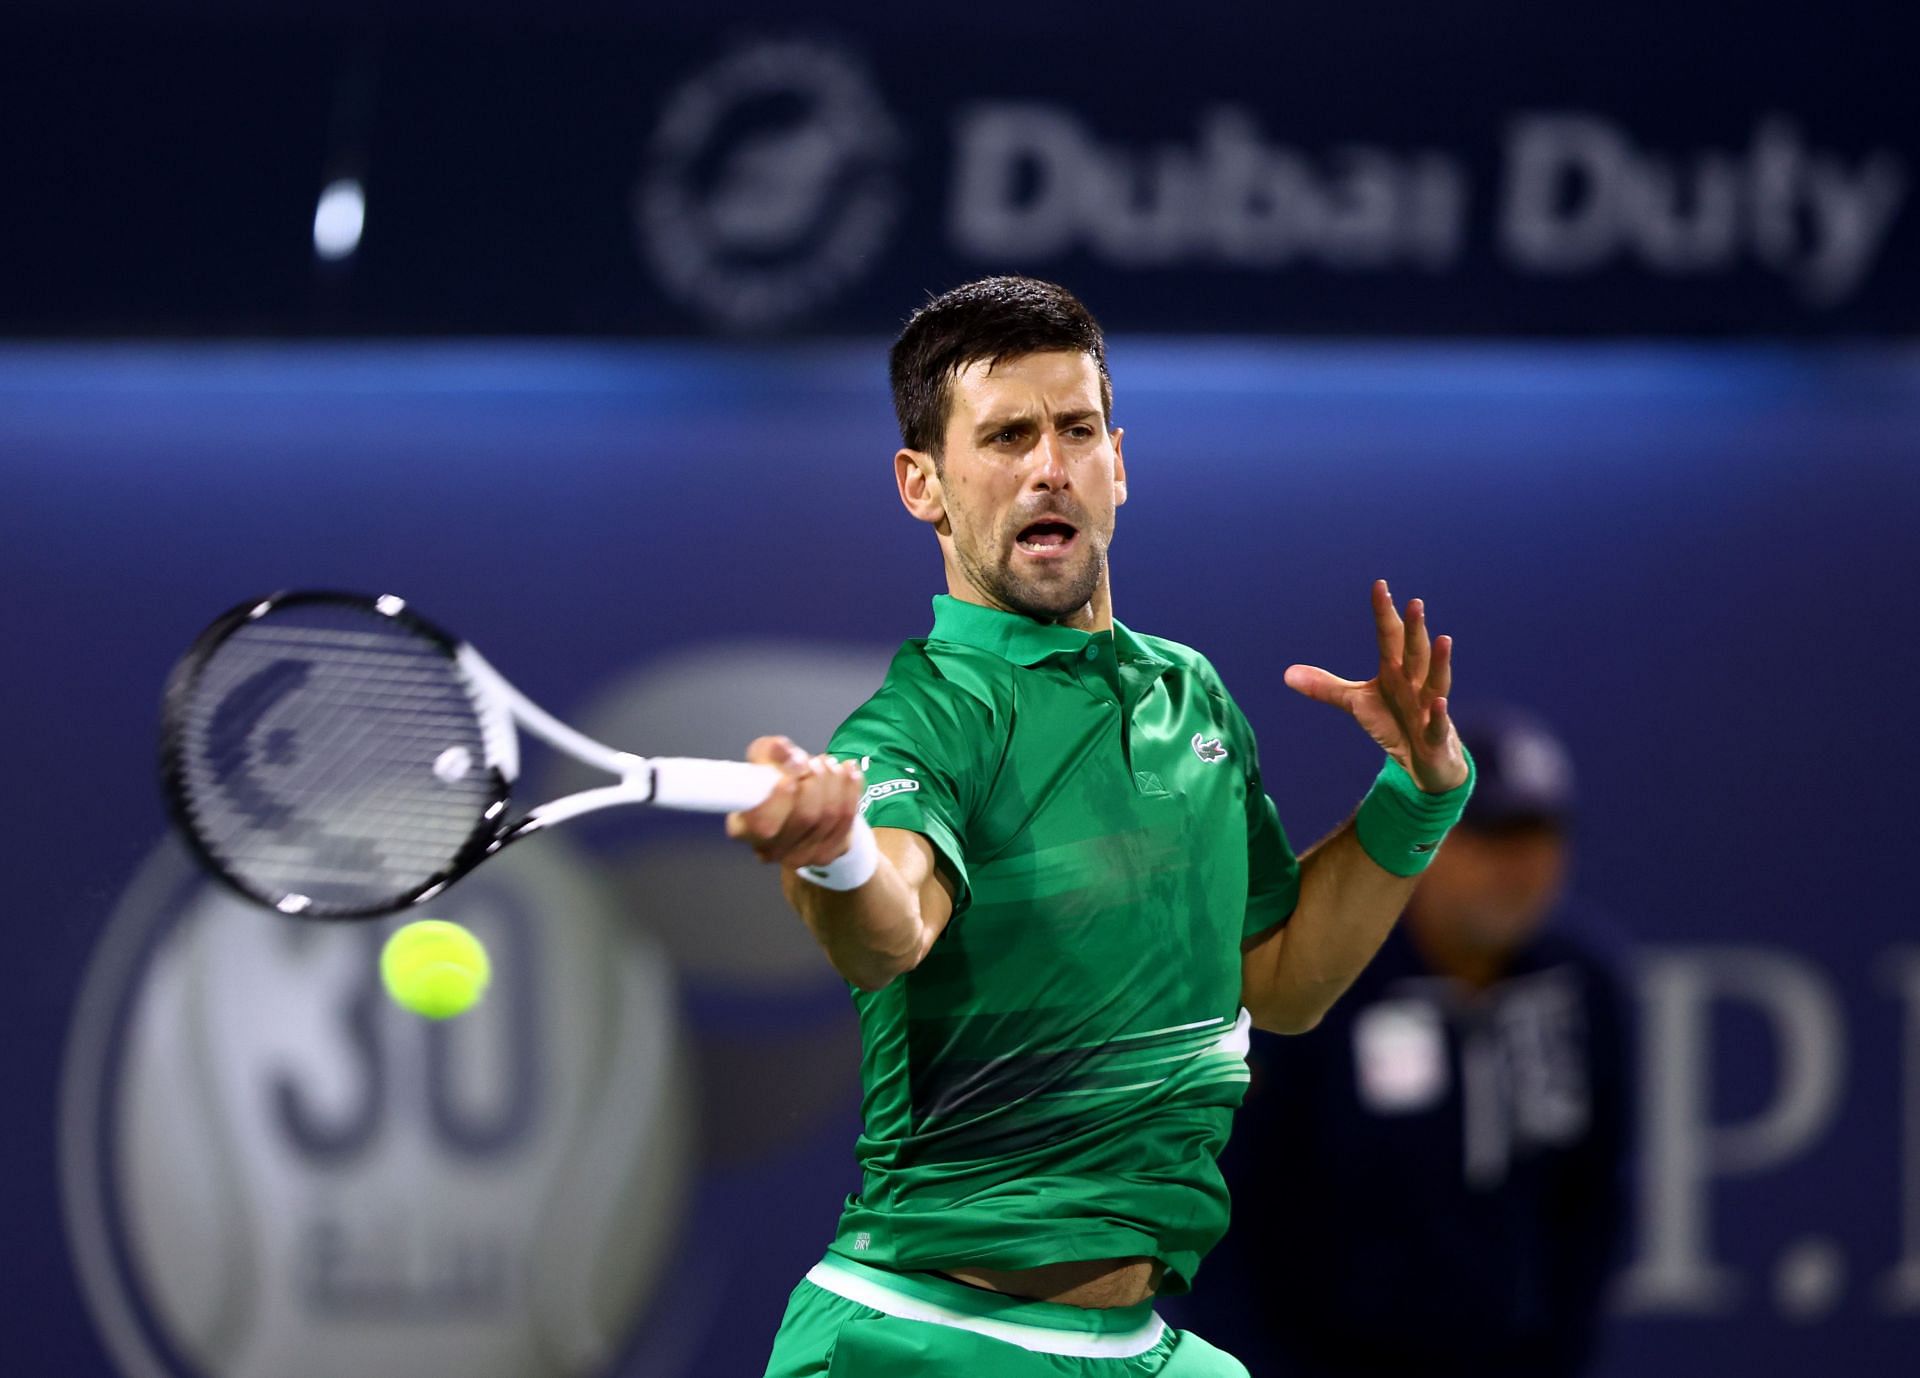 Djokovic in action at the Dubai Duty Free Tennis Championship